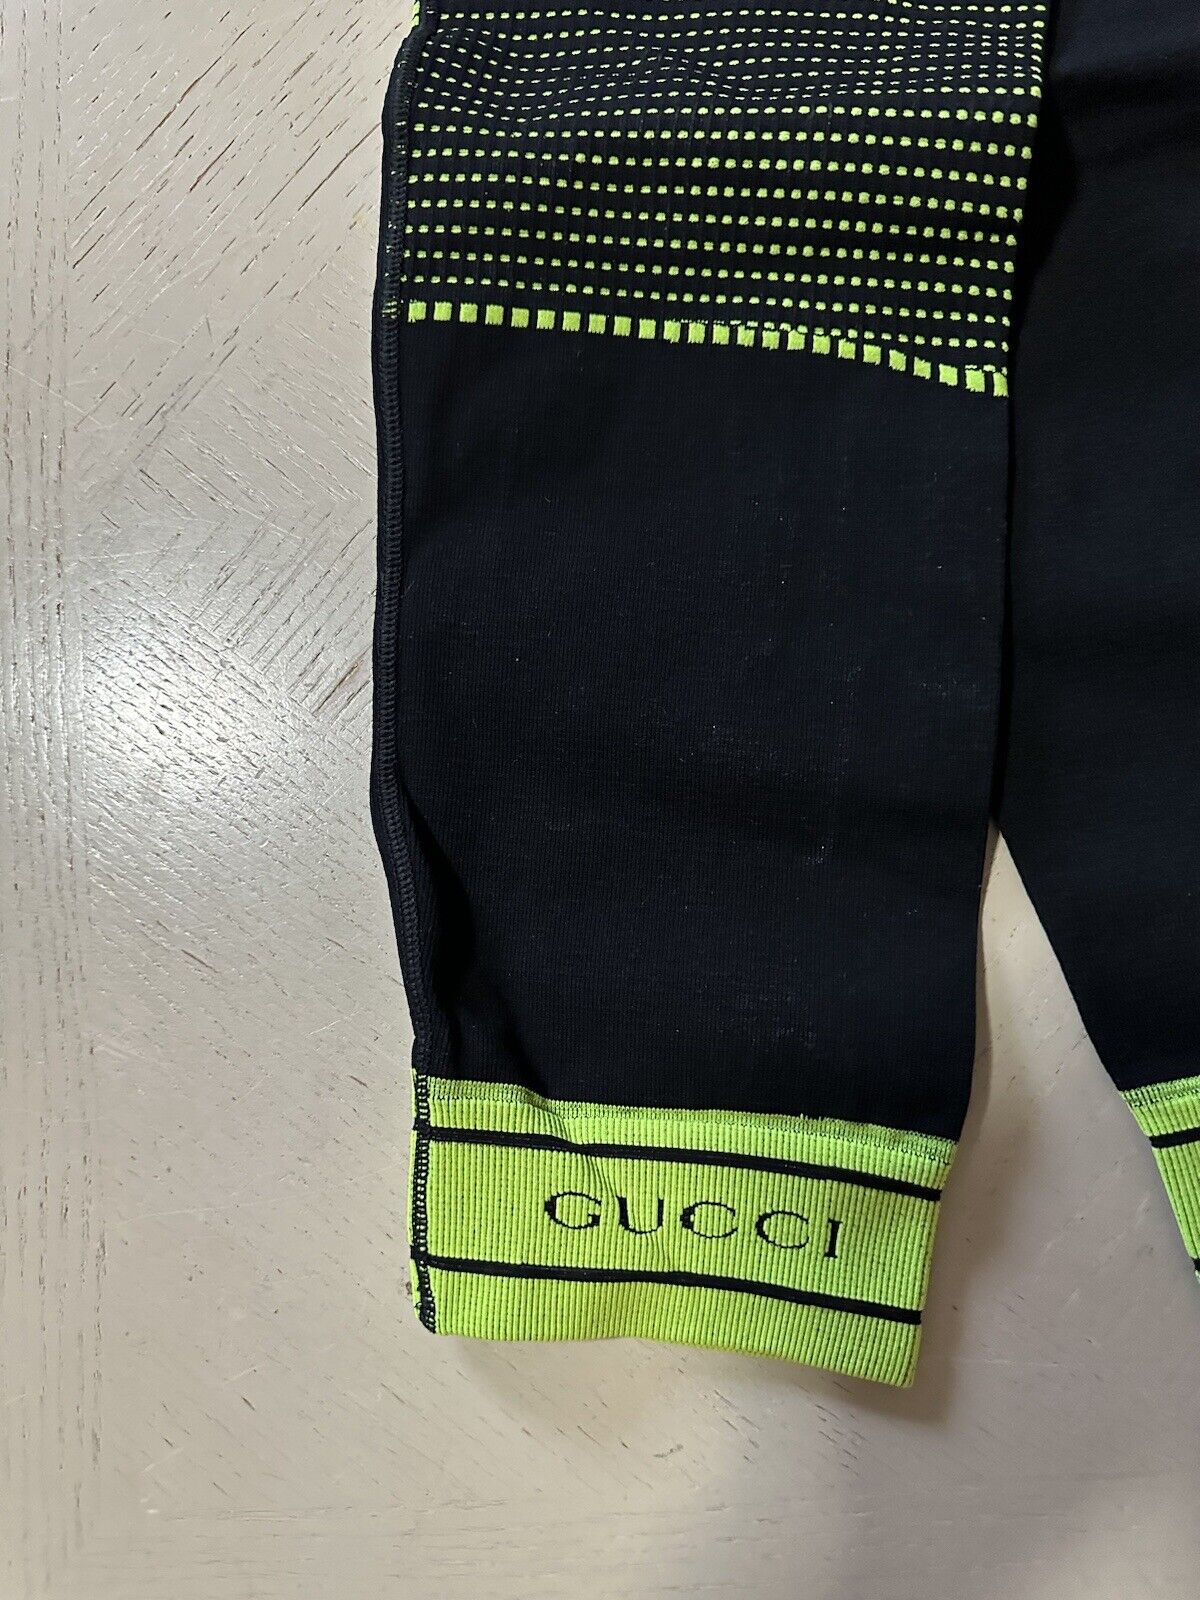 New $920 Gucci Men’s GG Jersey Jacquard Leggings Pants Black/Yellow M 696130